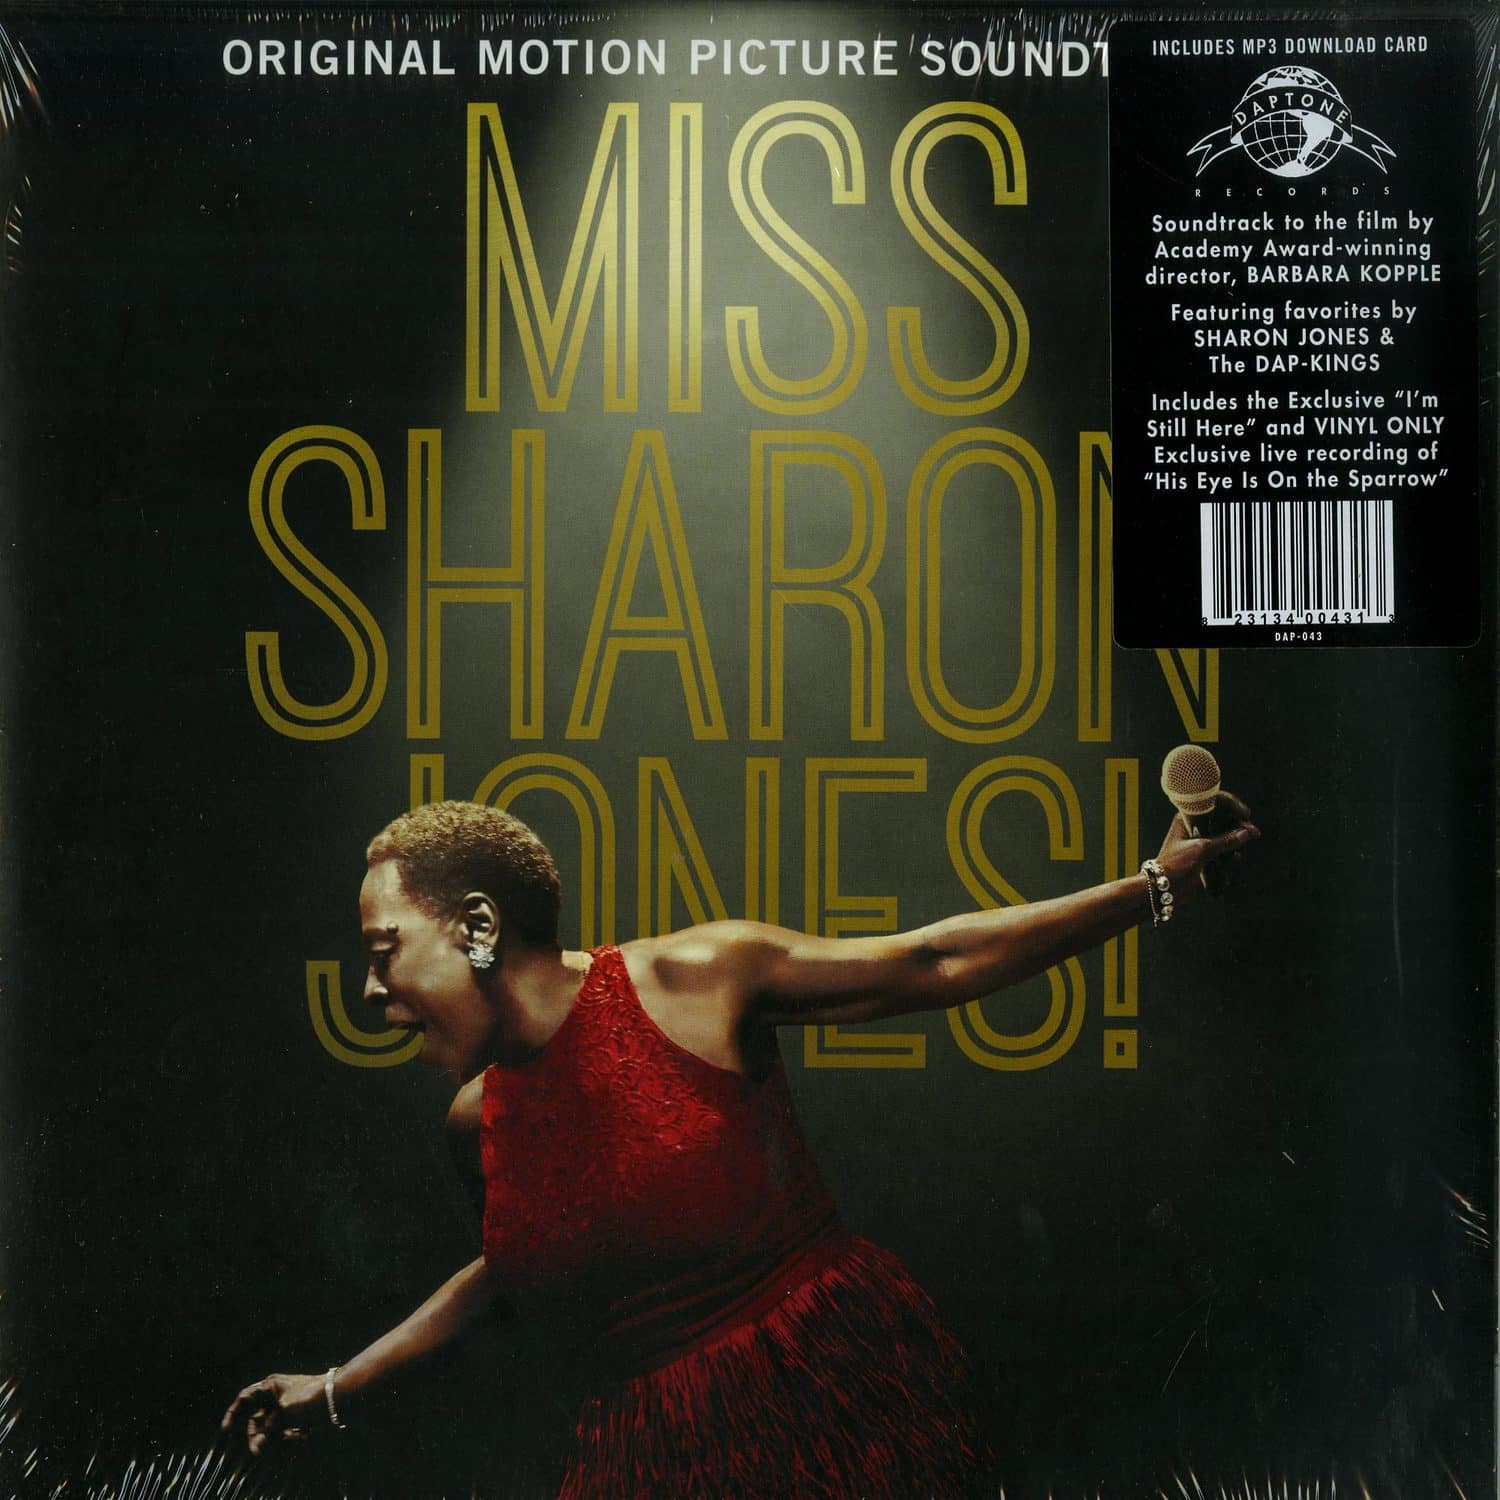 Sharon Jones & The Dap Kings - MISS SHARON JONES! O.S.T. 